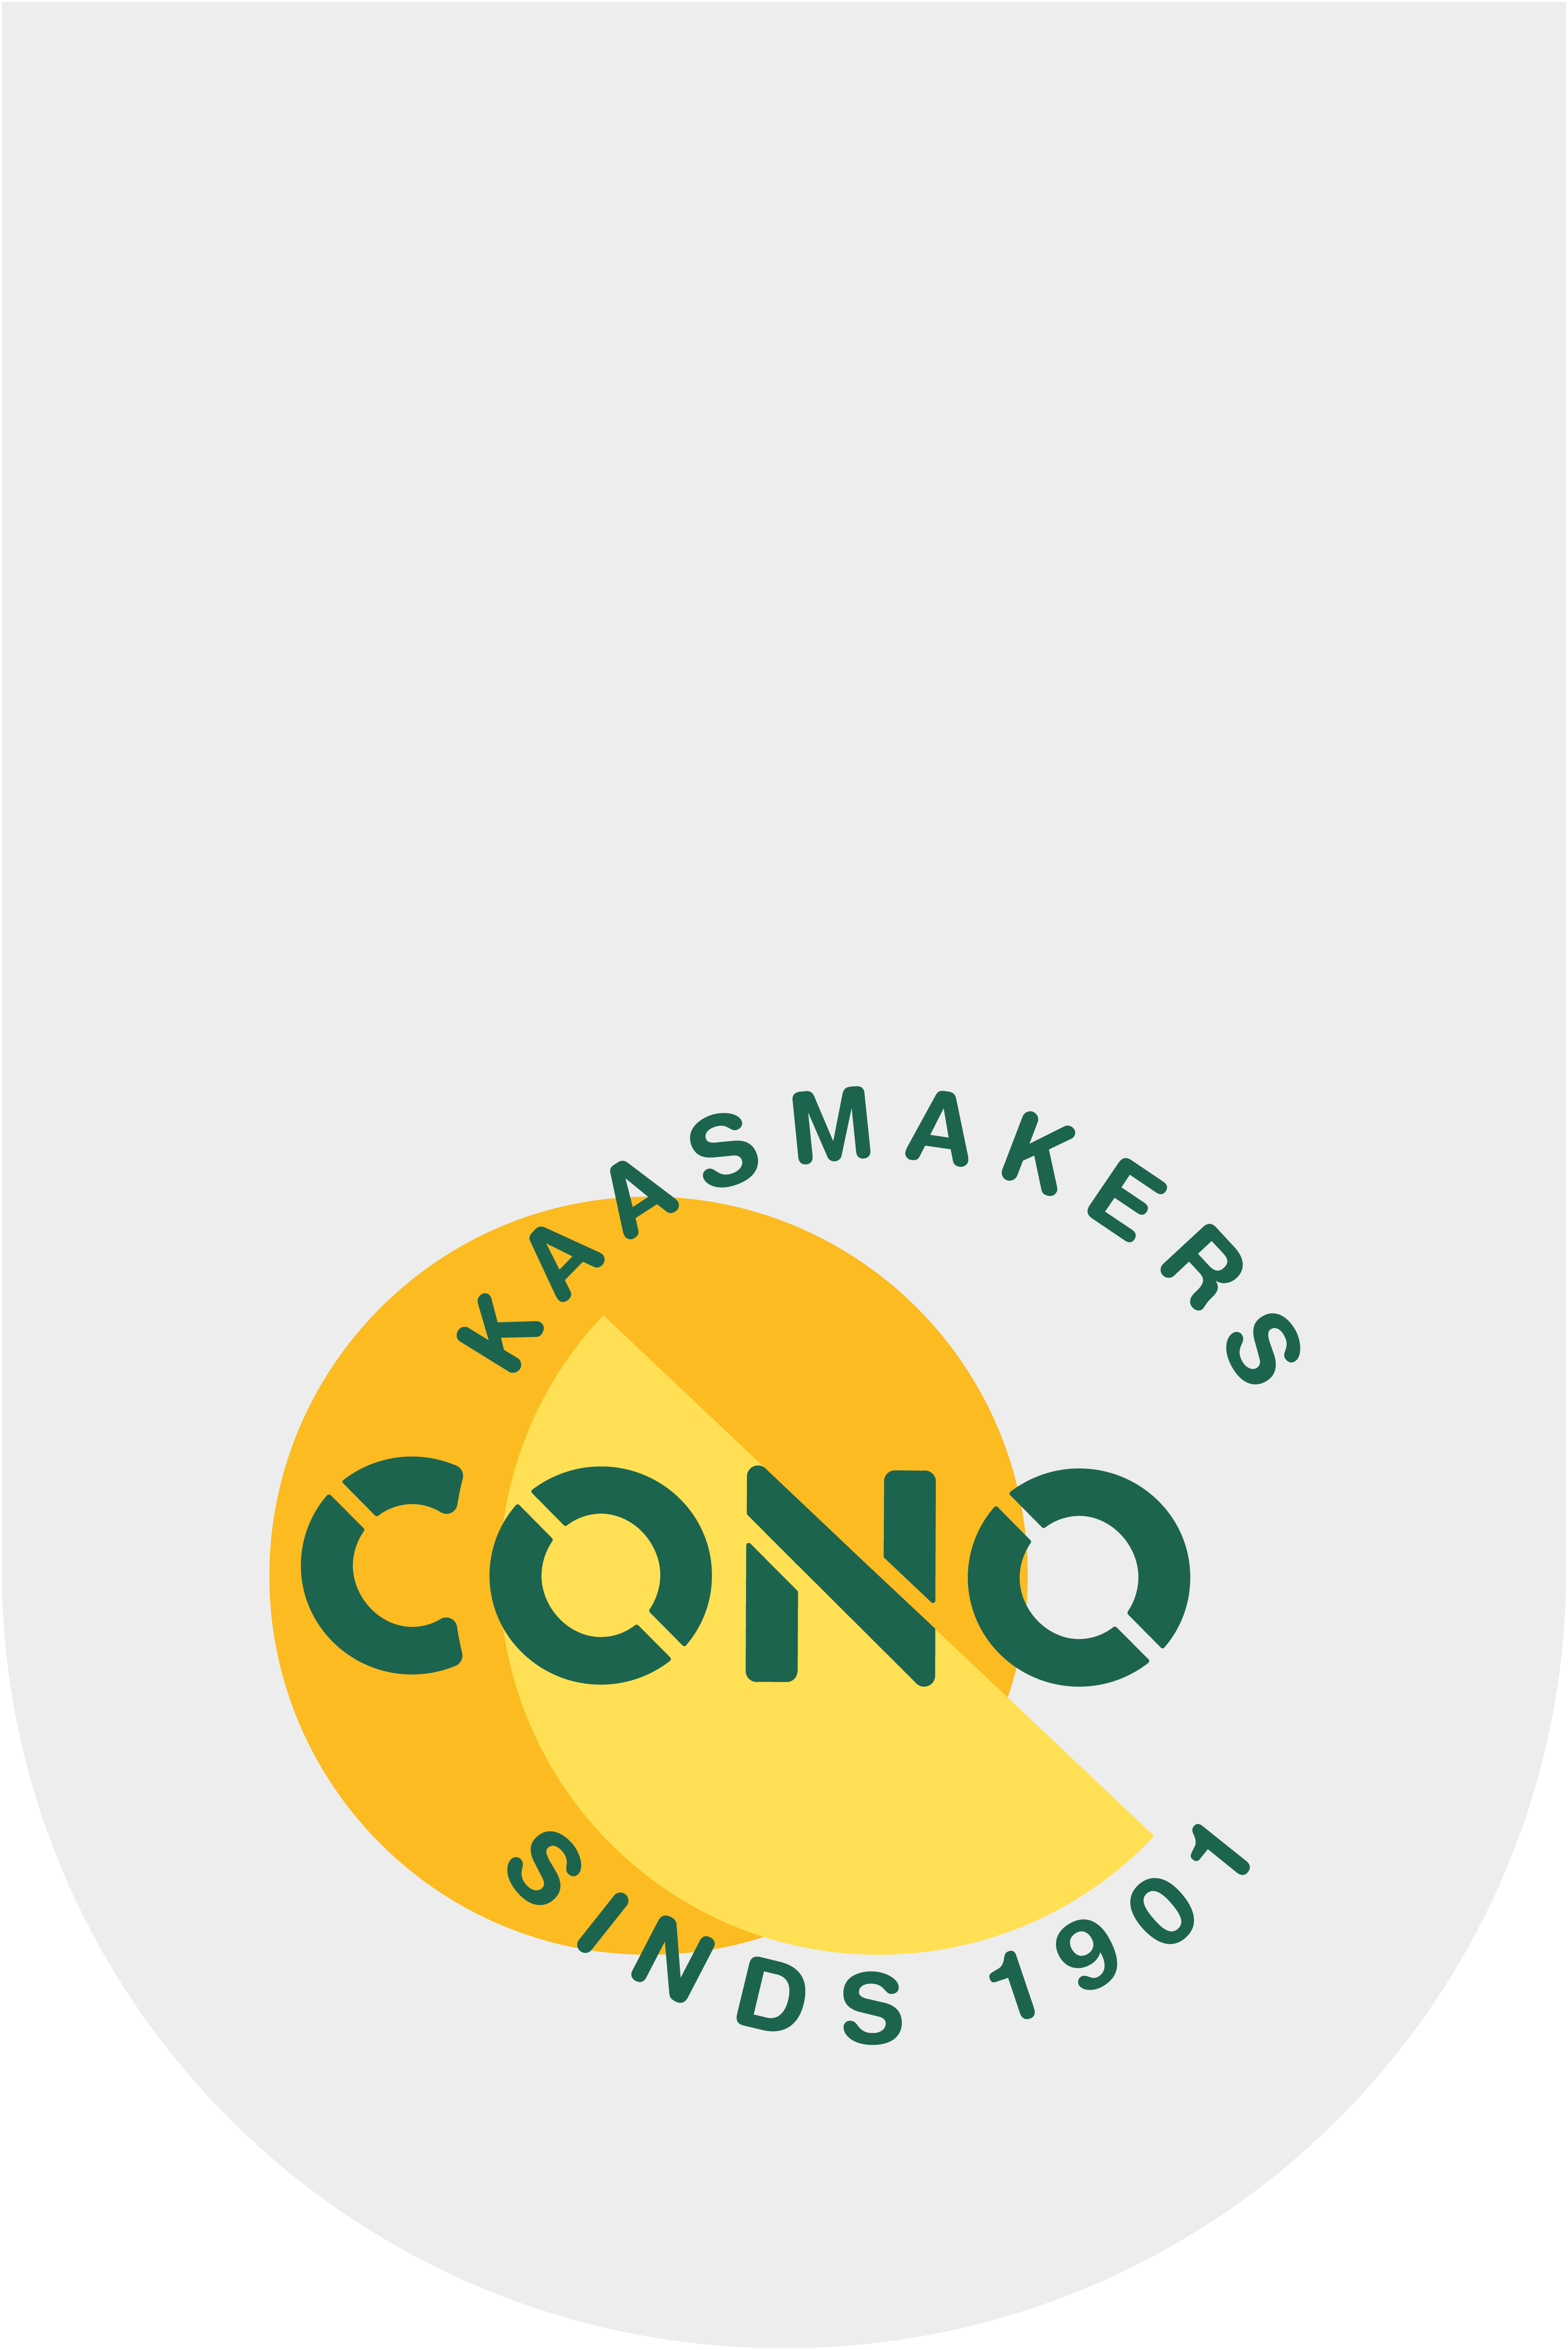 CONO Cheese Makers